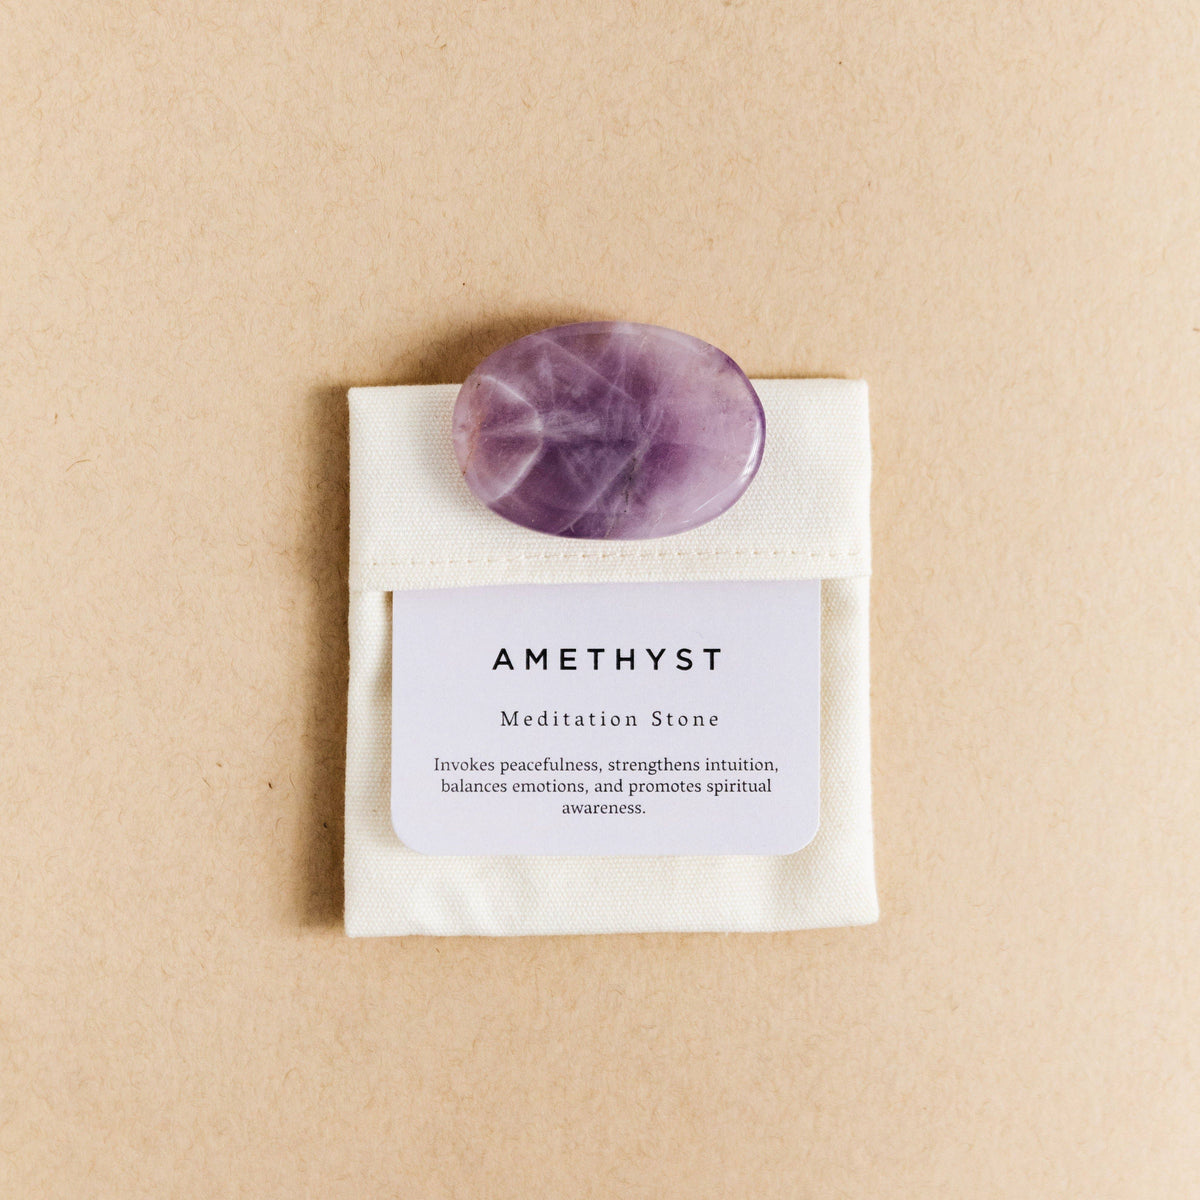 Amethyst - Meditation Stone